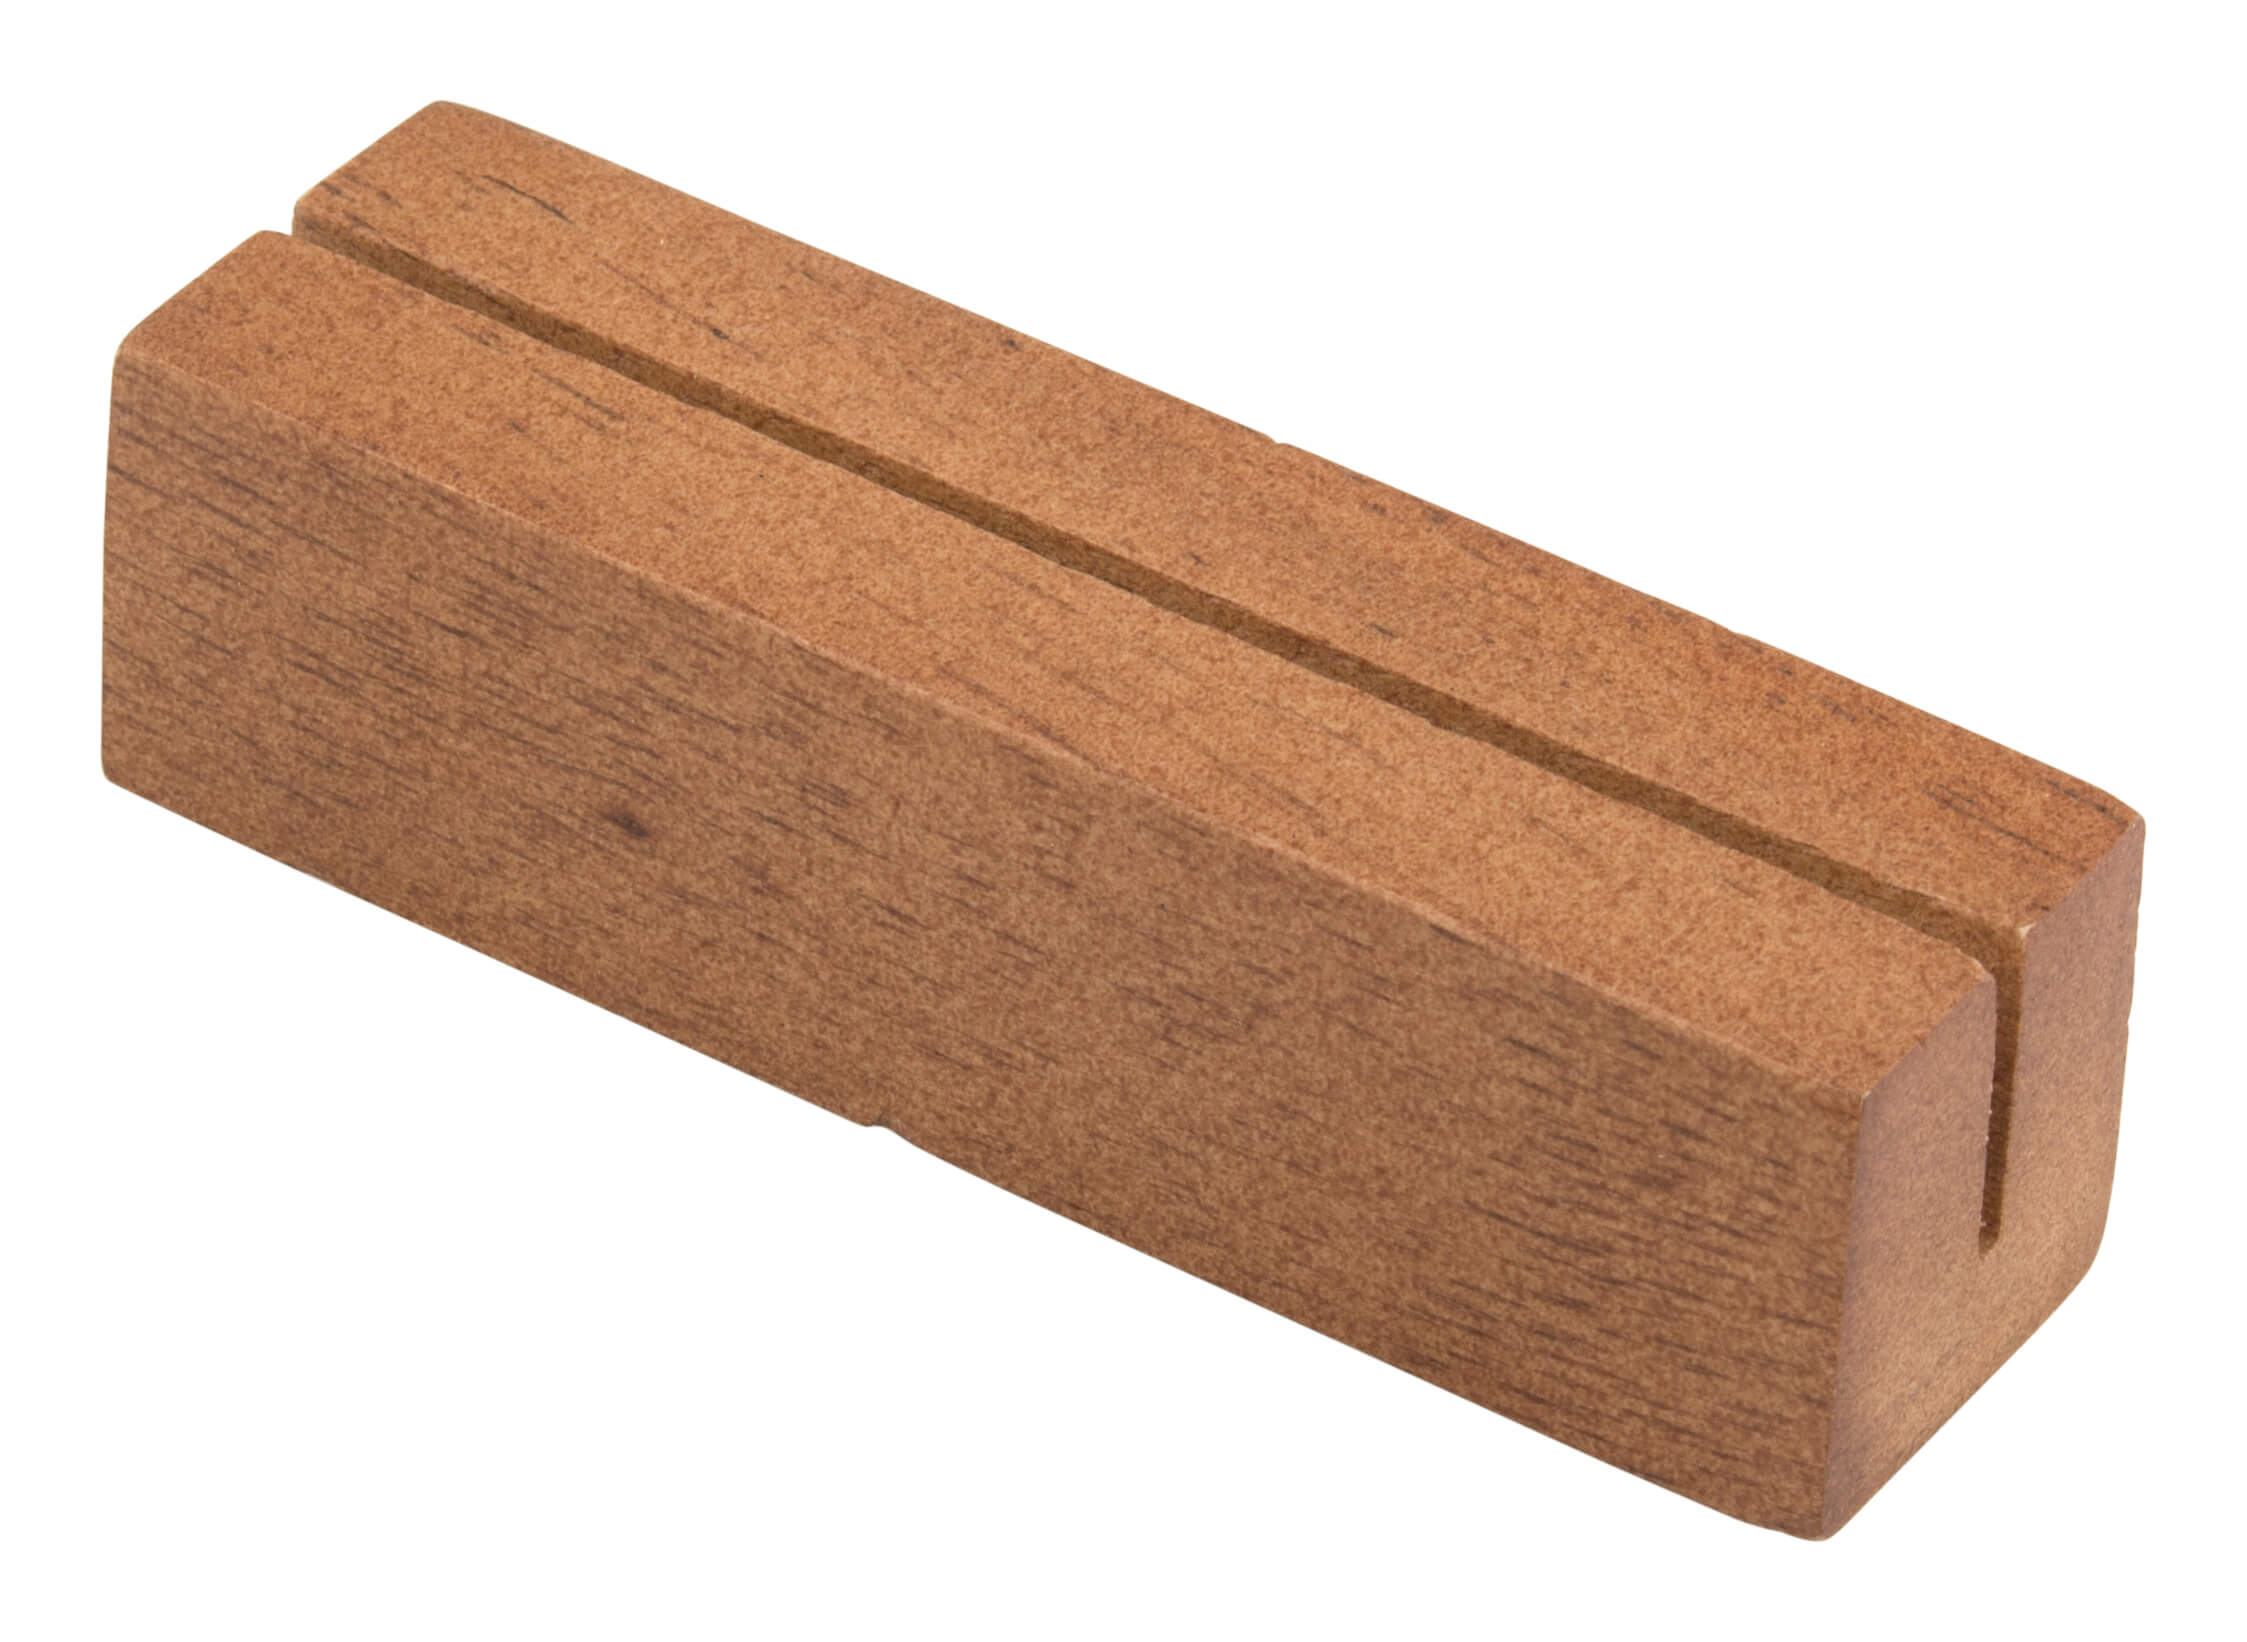 Kartenhalter länglich, Holz, braun - 9x2,5x2,5cm